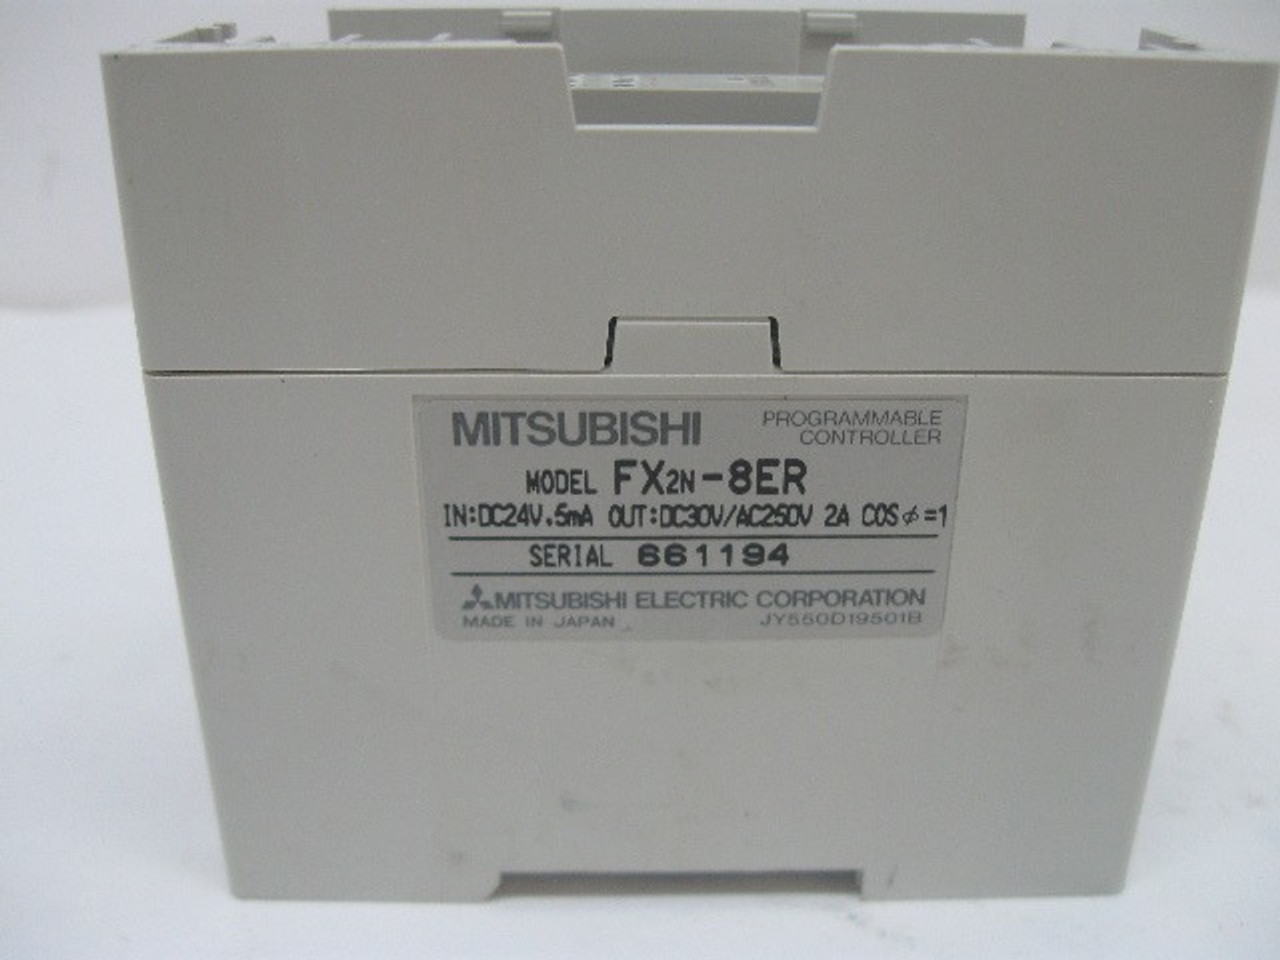 Mitsubishi FX2N-8ER Programmable Controller